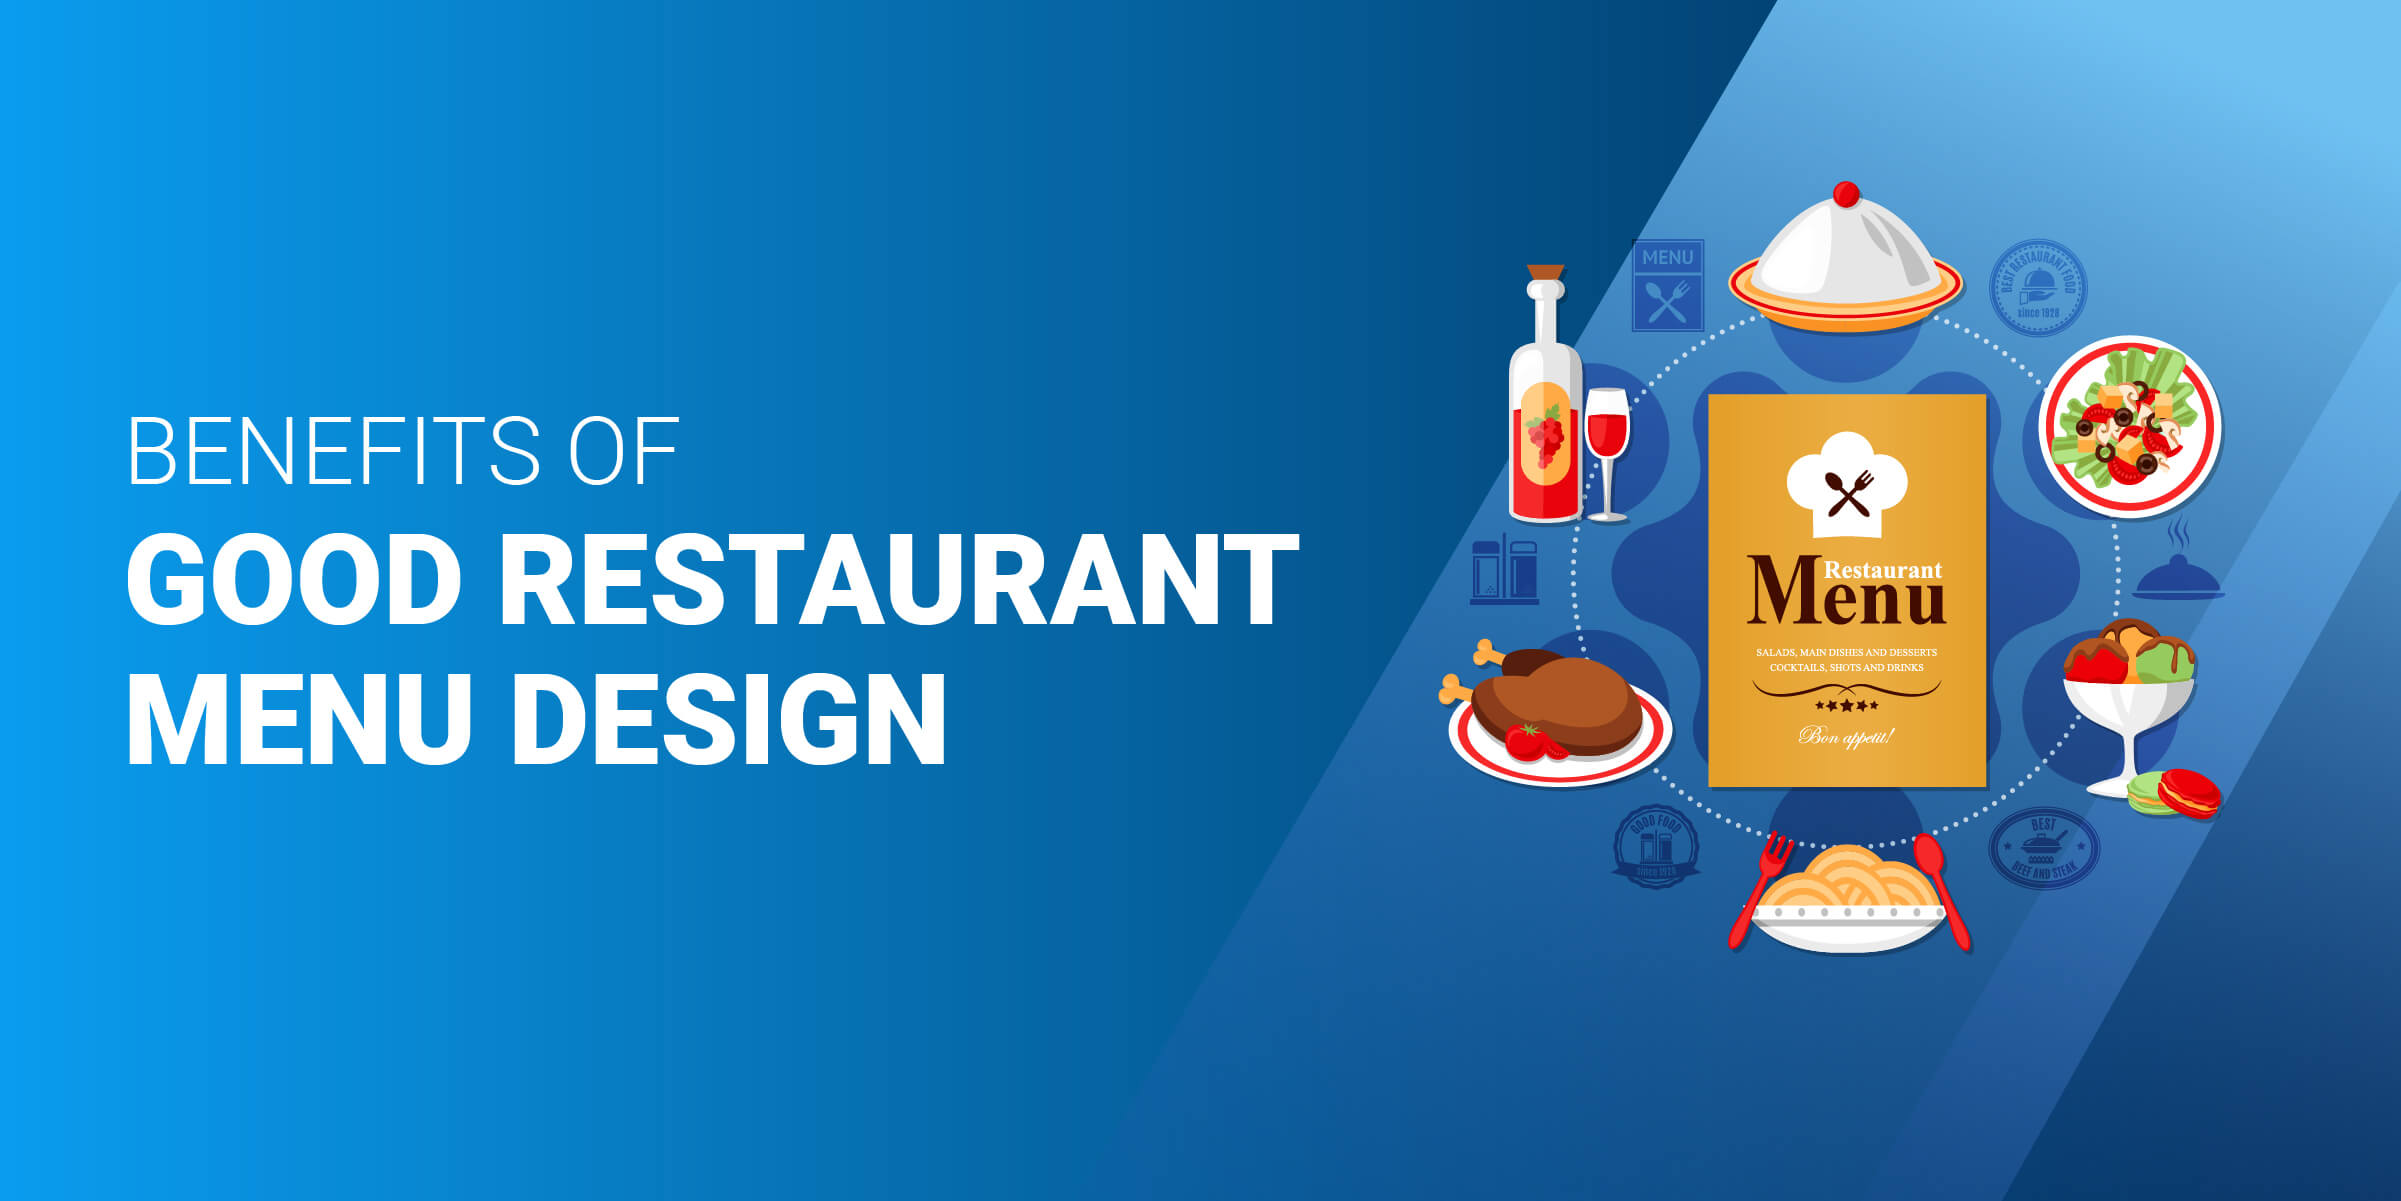 Benefits of Good Restaurant Menu Design